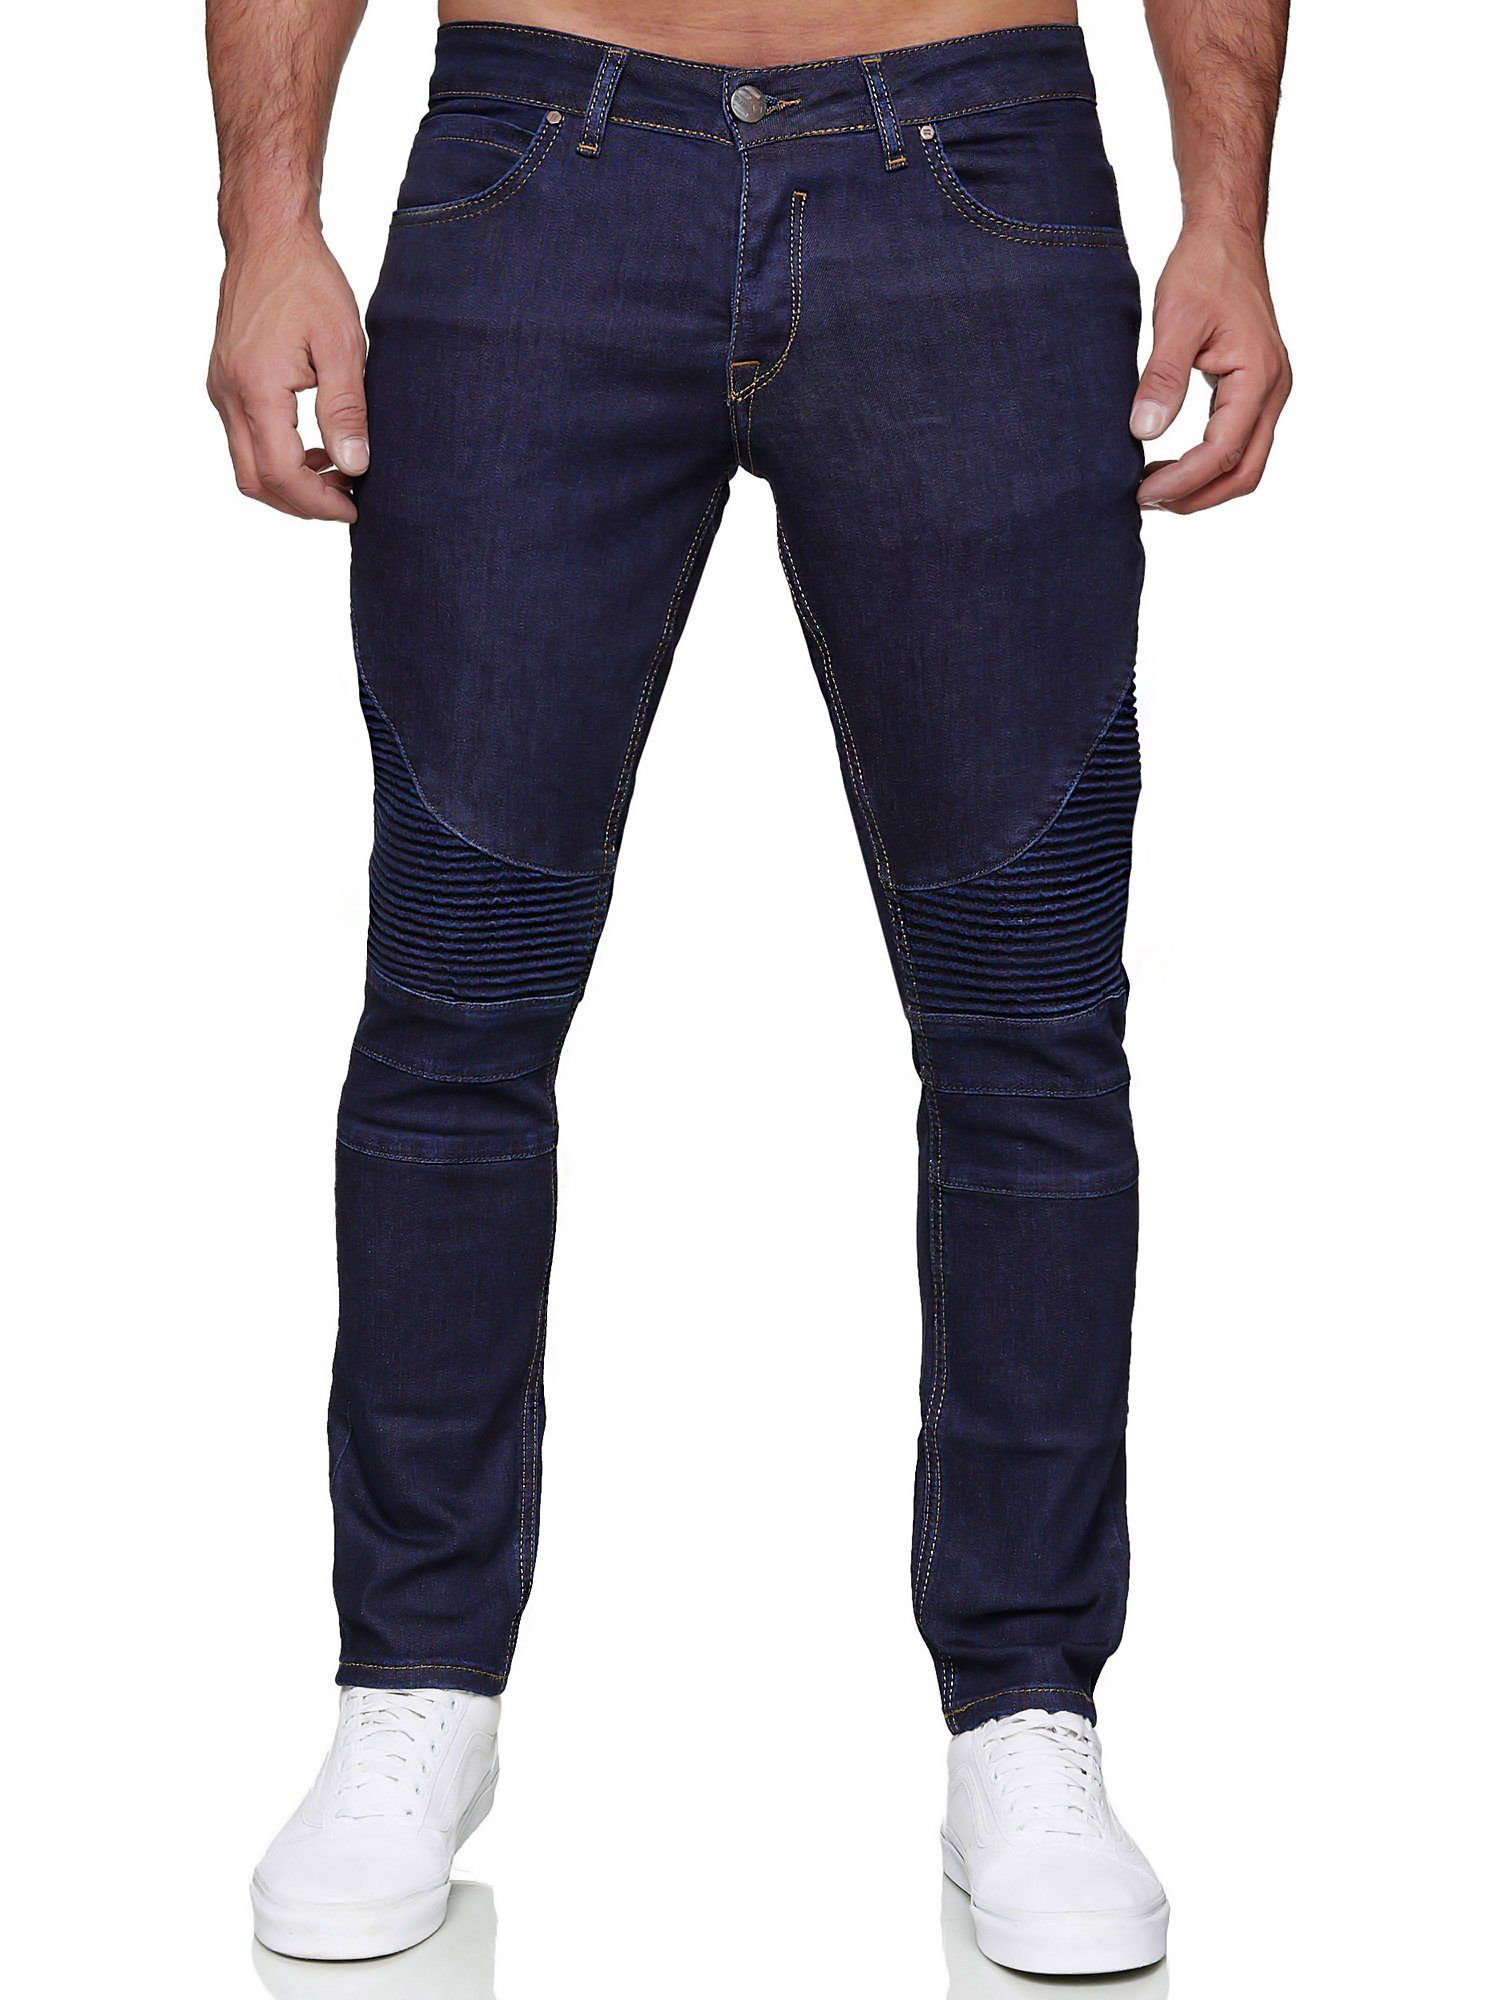 cooler Biker-Optik in Slim-fit-Jeans dunkelblau Tazzio 16517